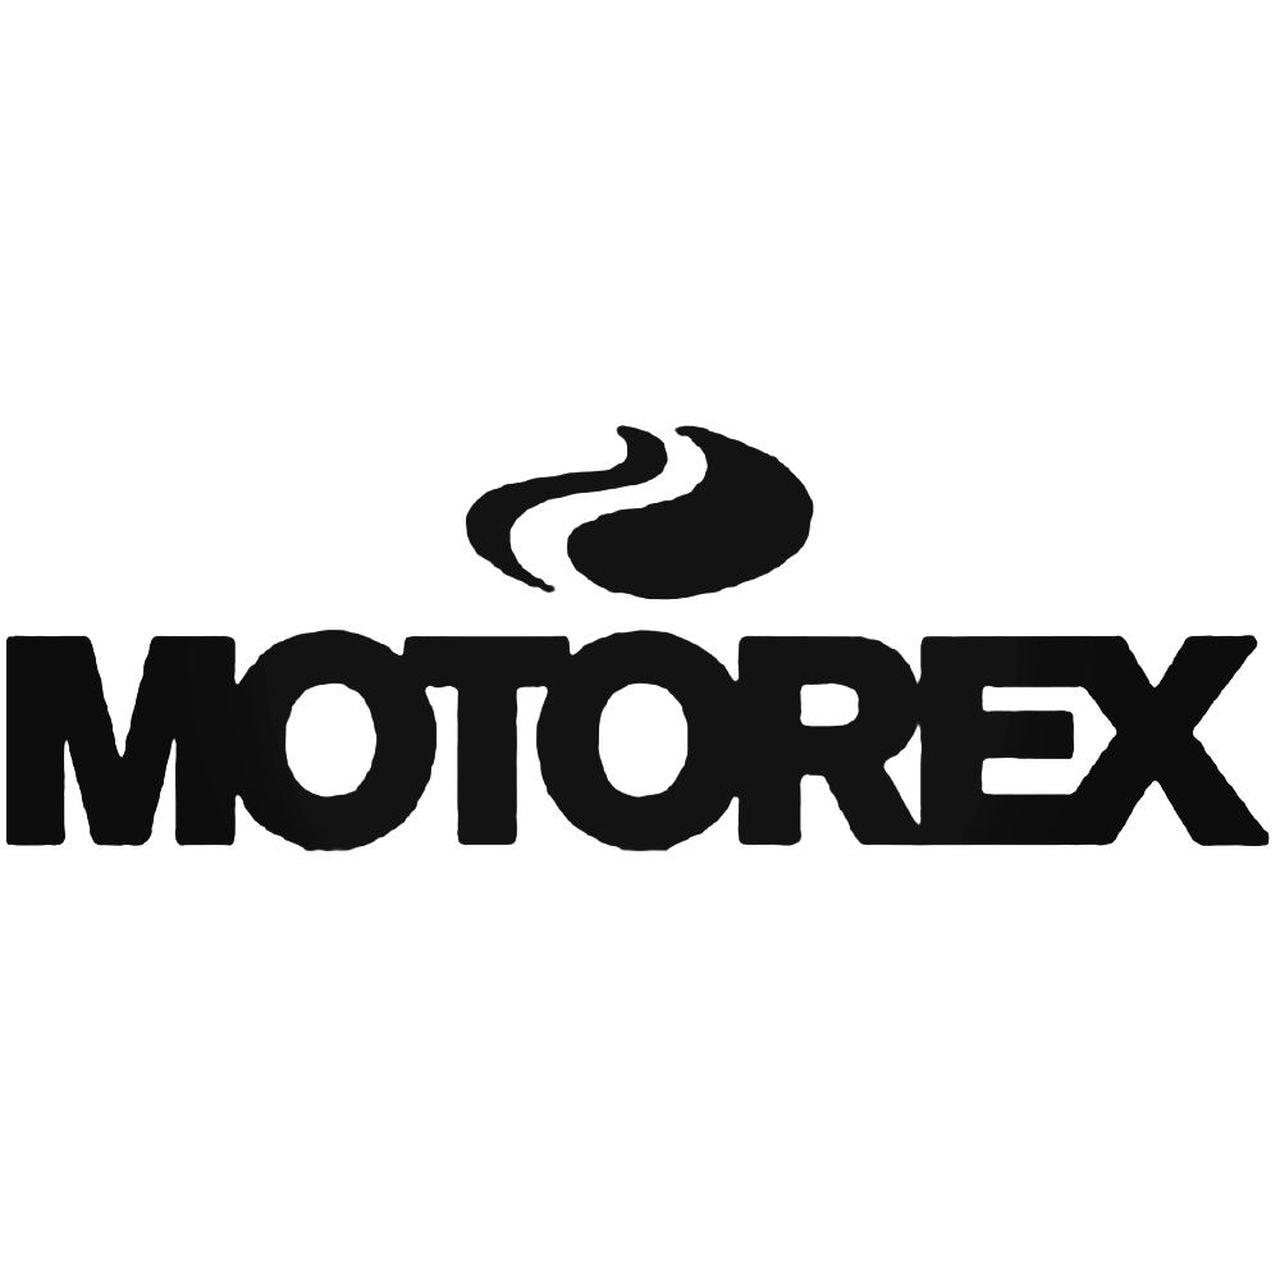 Motorex Logo - Motorex Vinyl Decal